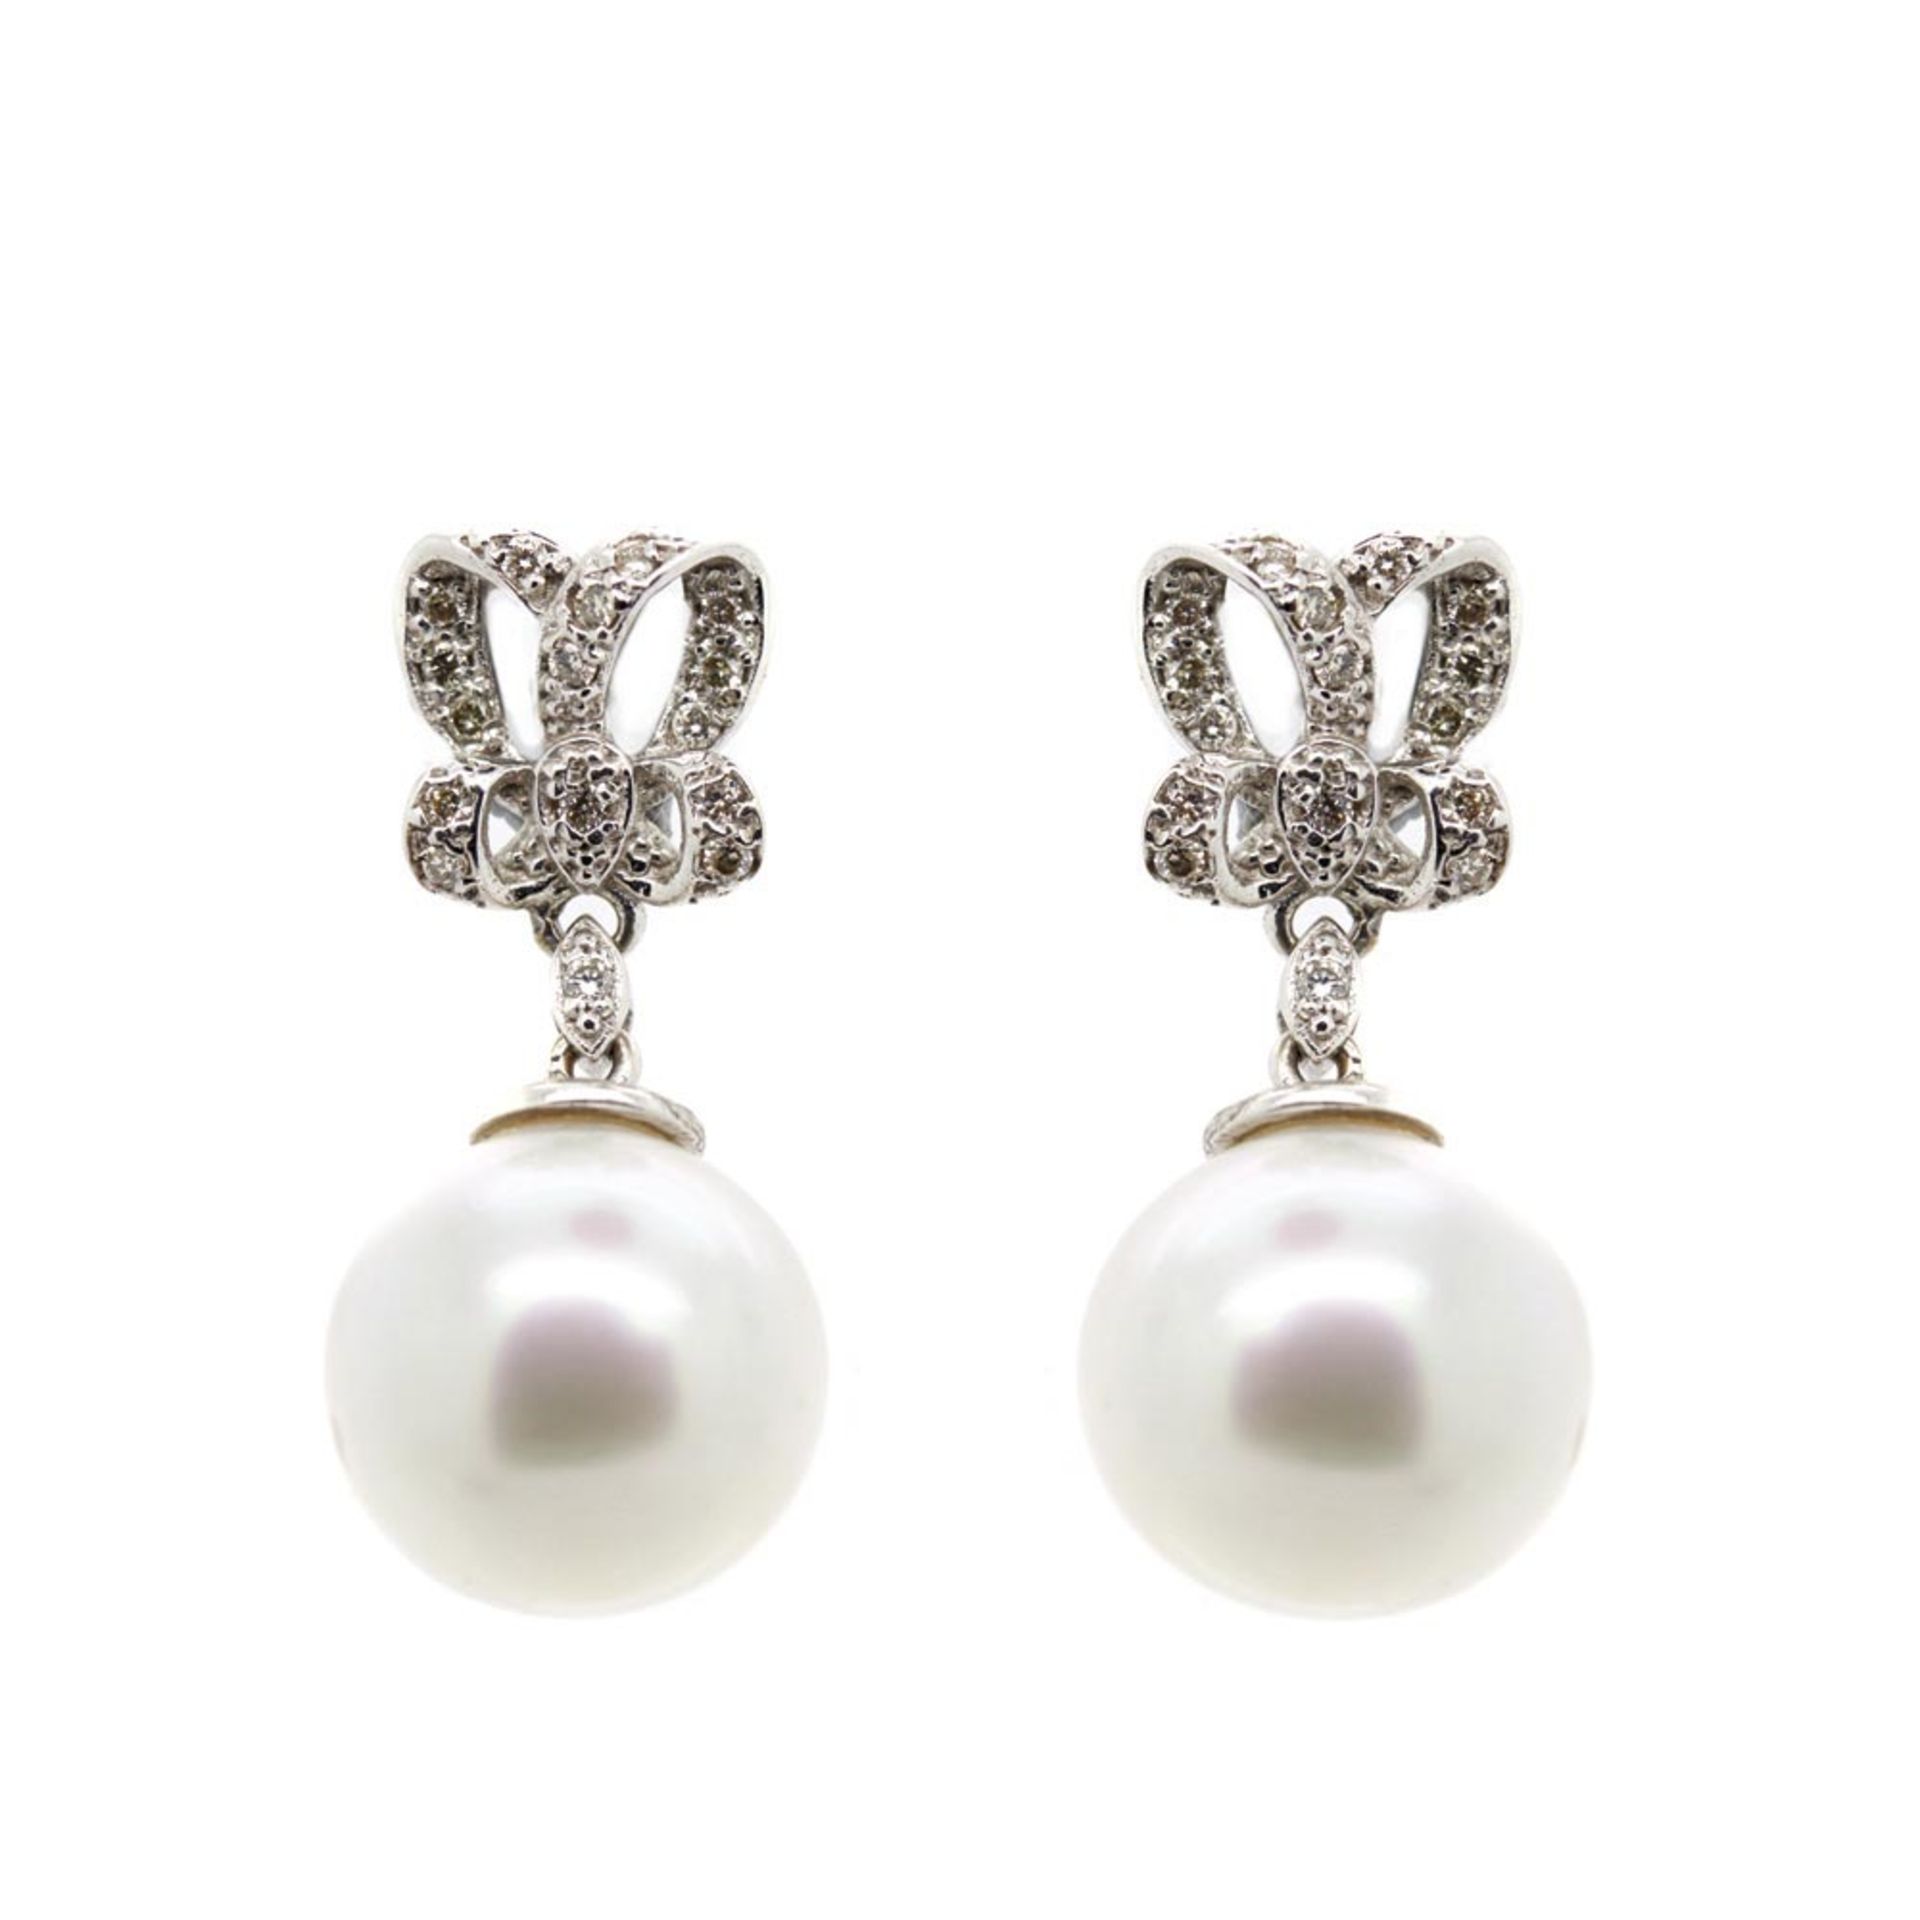 White gold, diamonds and Australian pearl earrings